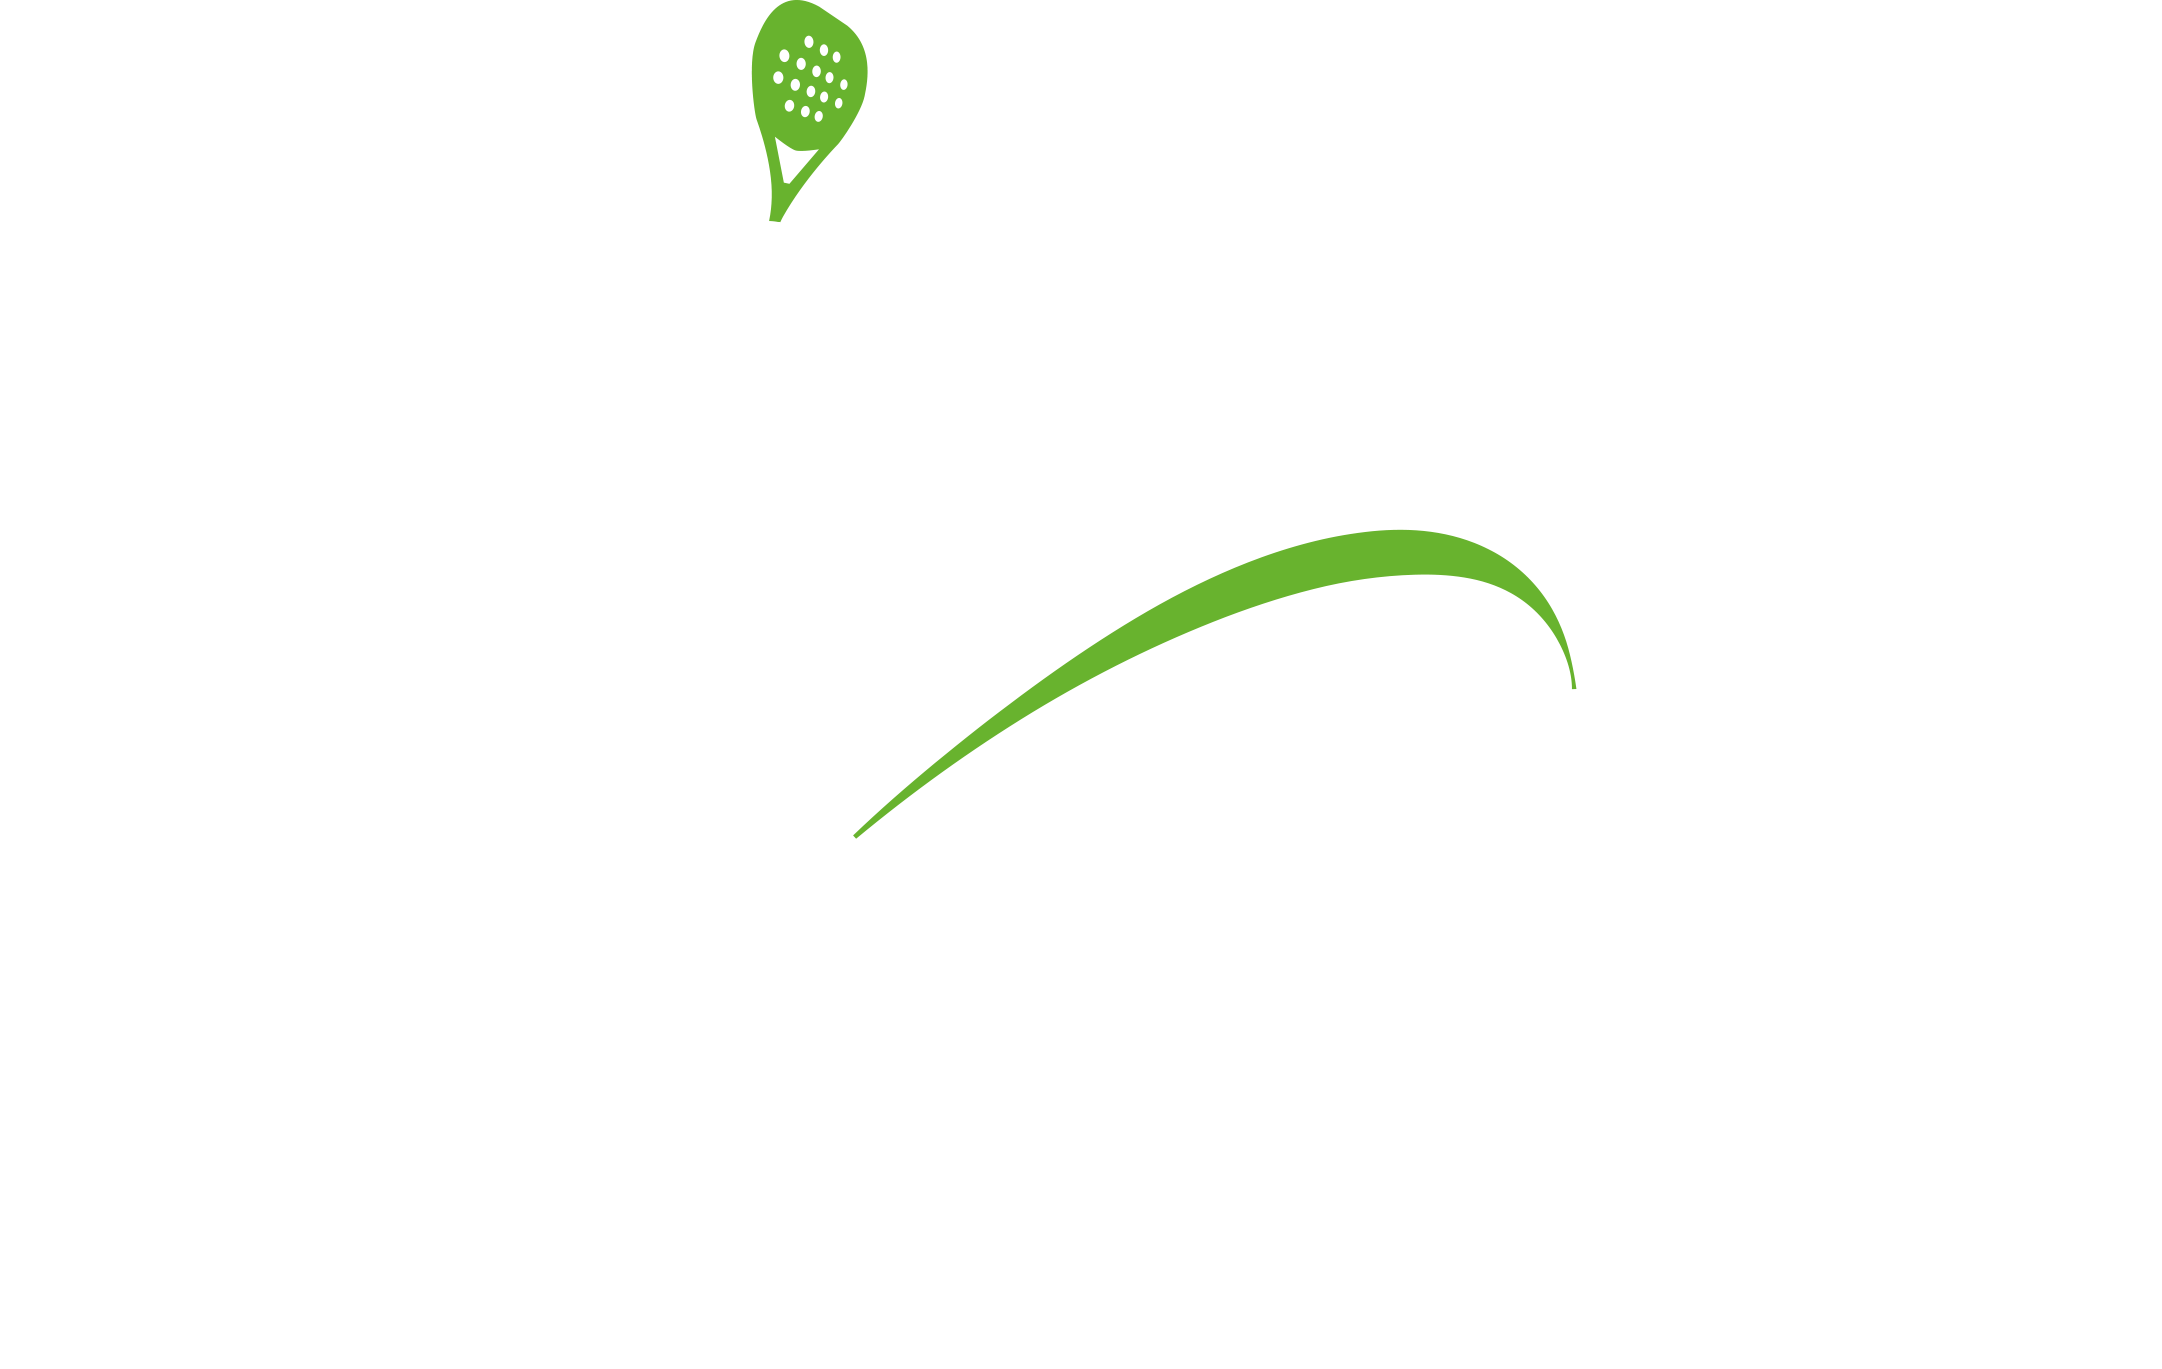 Skypadel Desenzano